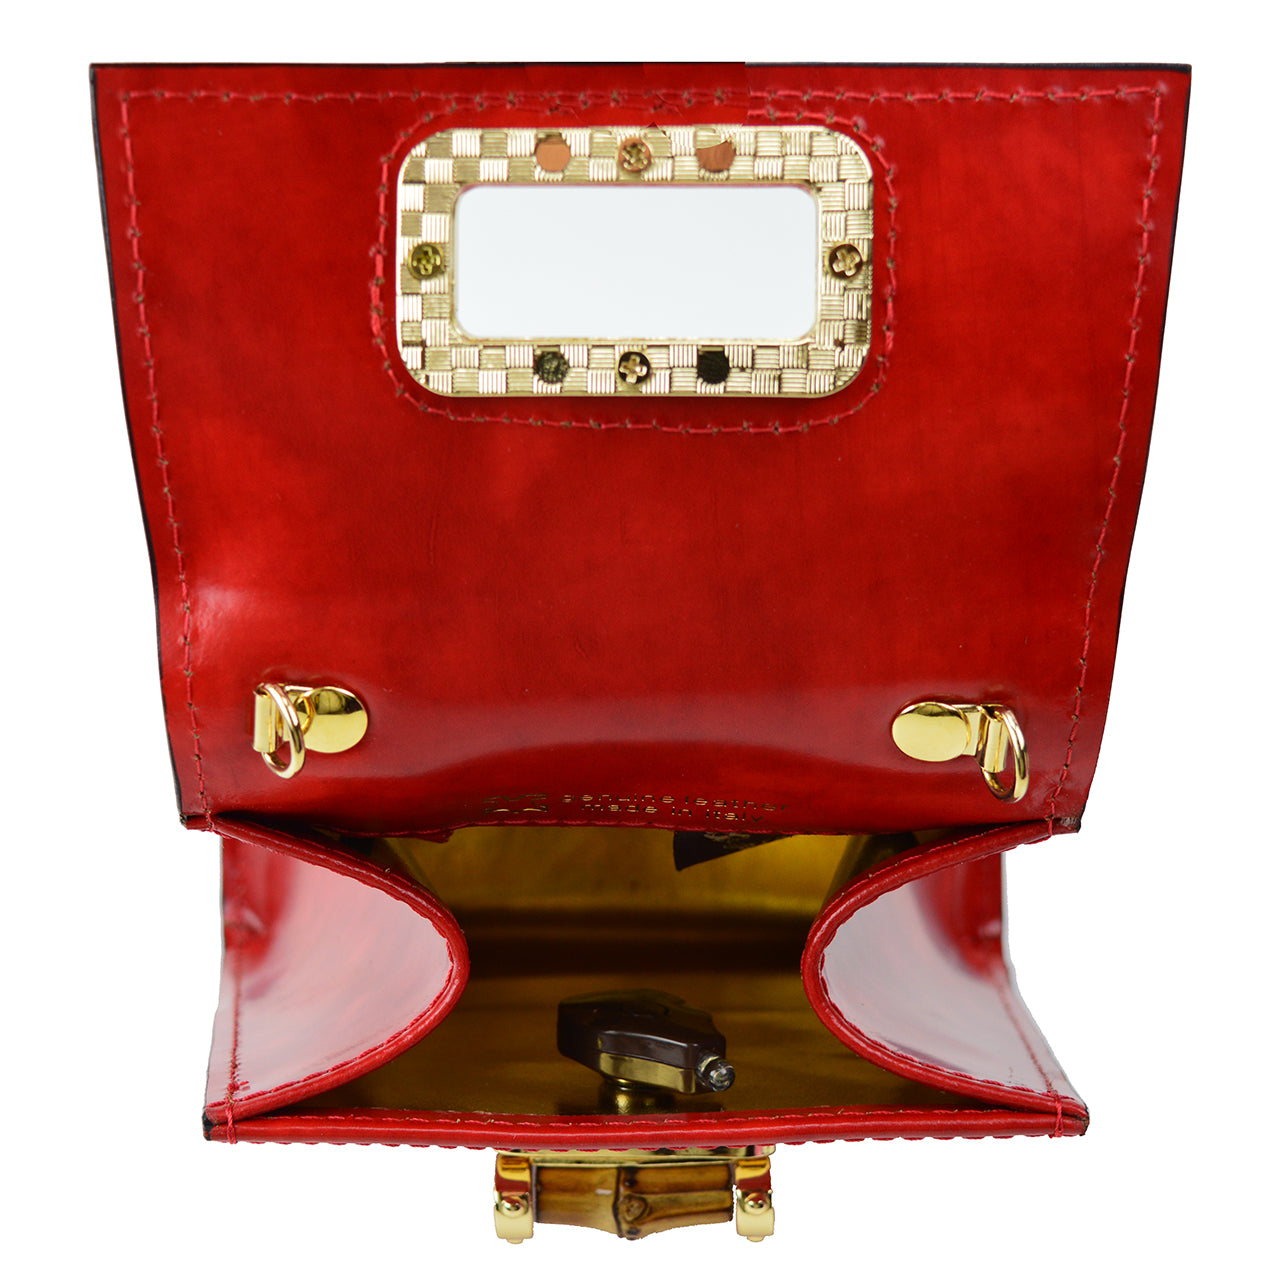 Pratesi Castalia Lady Bag in genuine Italian leather - Castalia Chianti